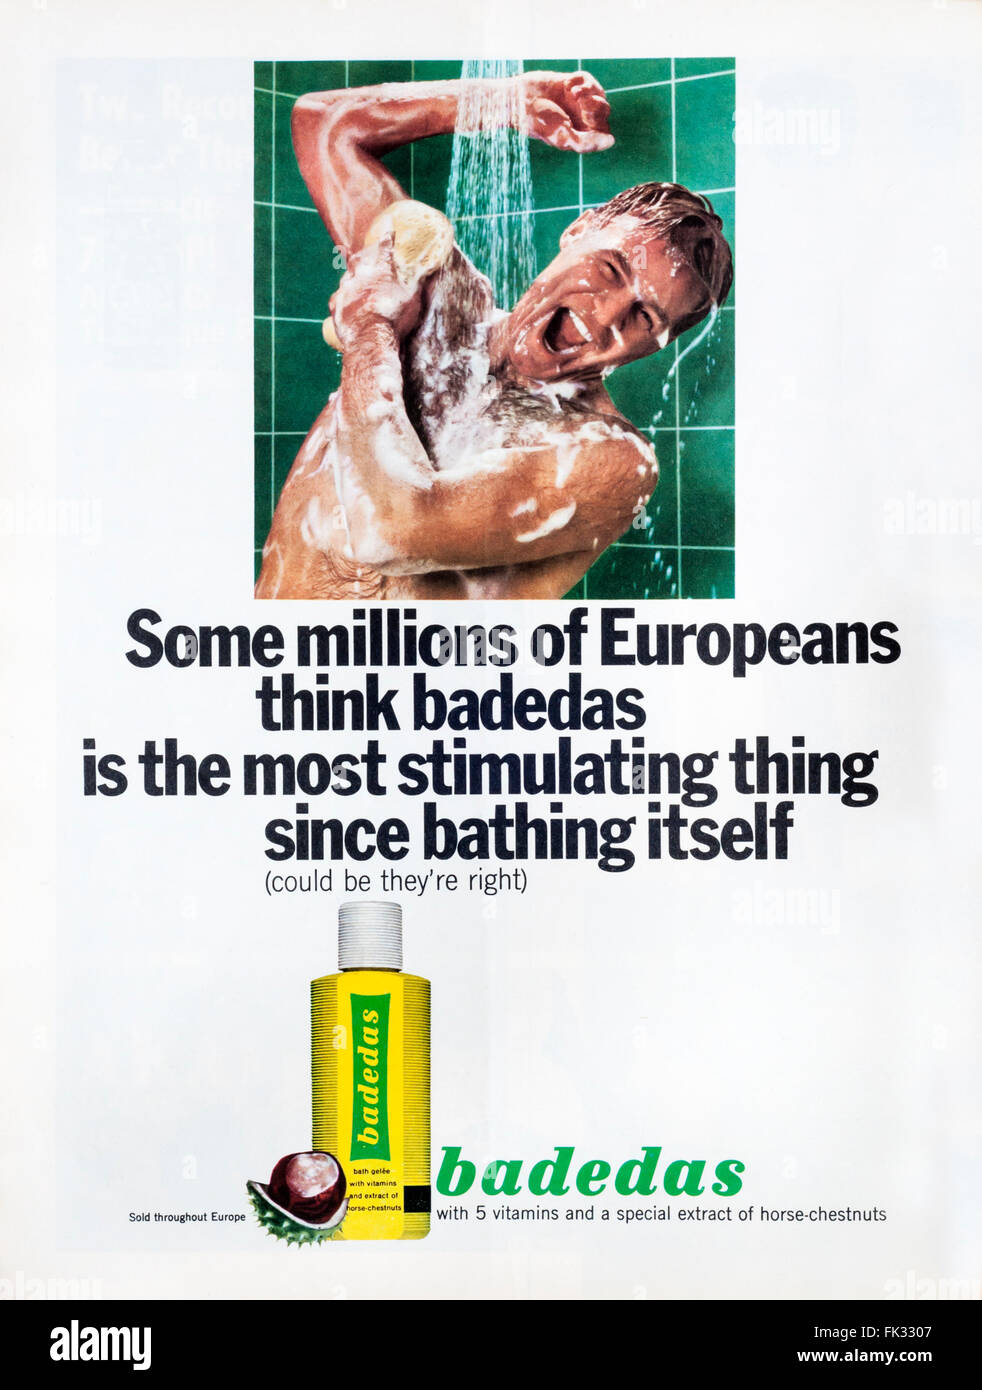 1960er Jahren Duschgel Magazin Werbung Werbung Badedas Stockfotografie -  Alamy